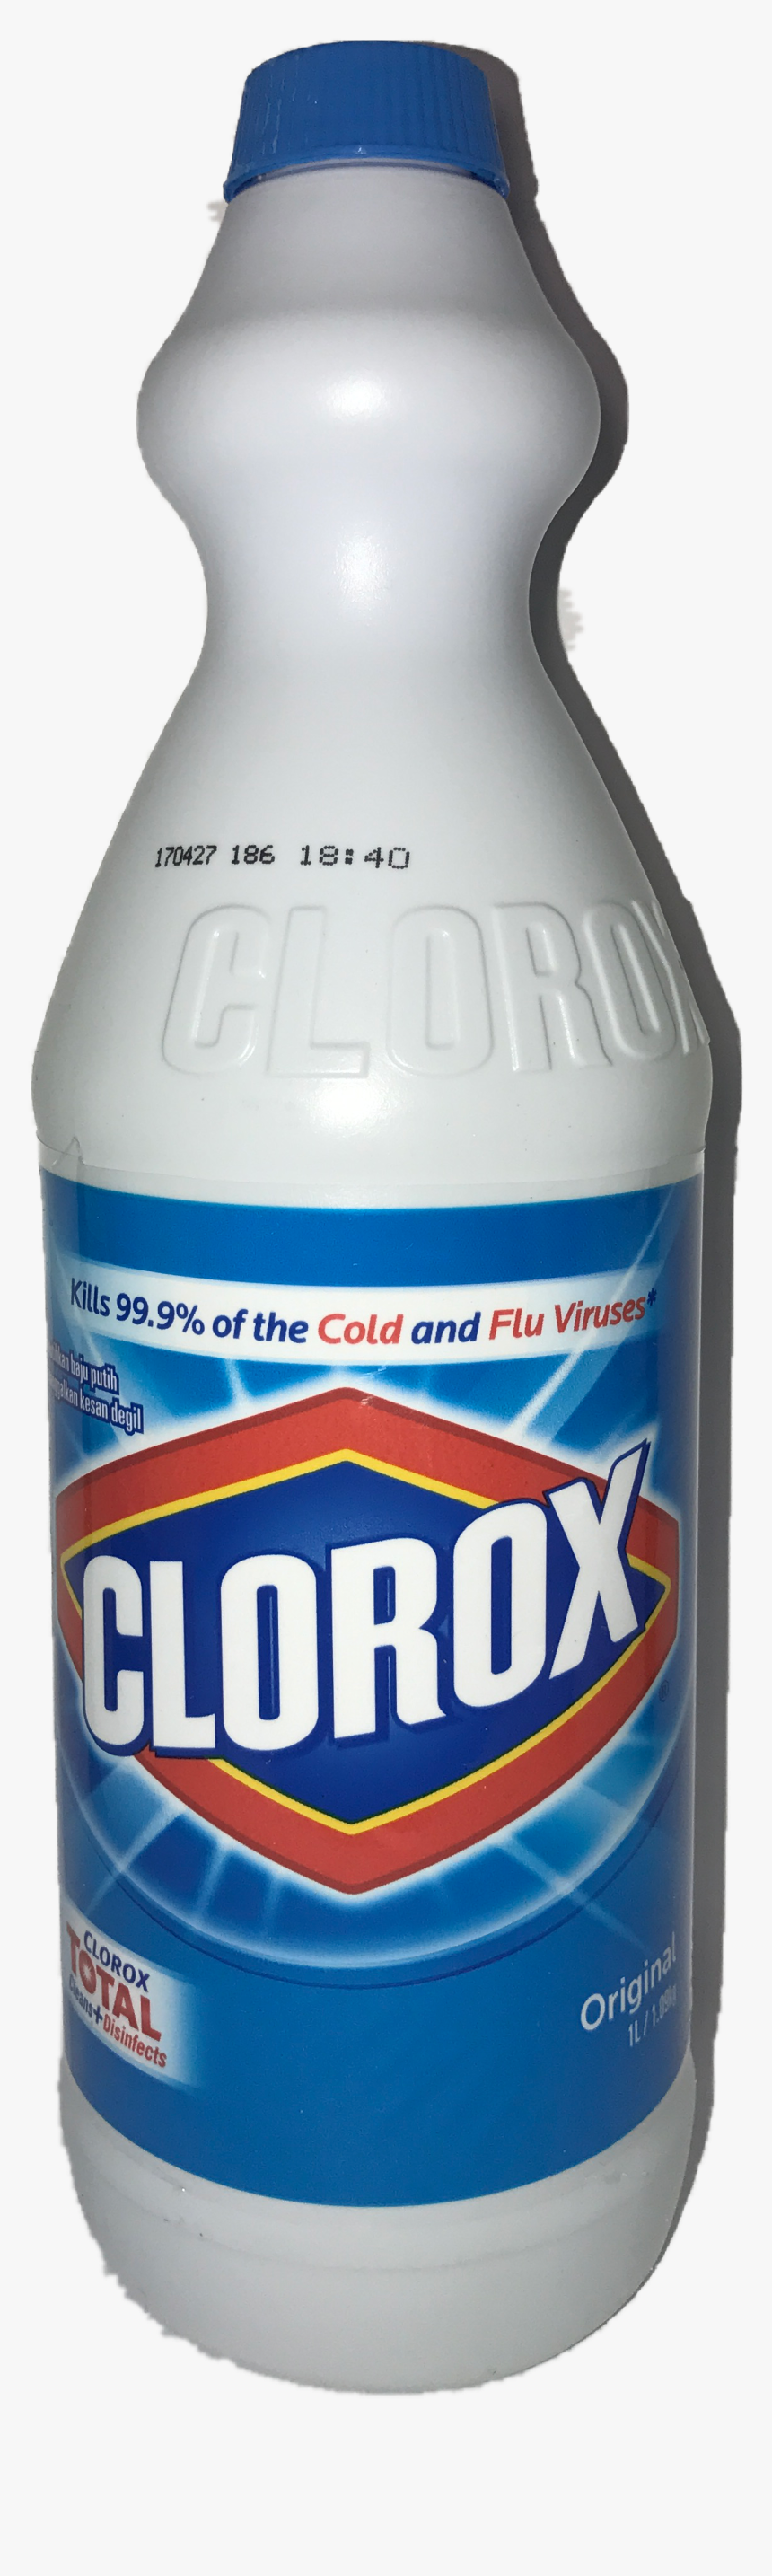 Clorox Bleach Regular 1l - Clorox, HD Png Download, Free Download